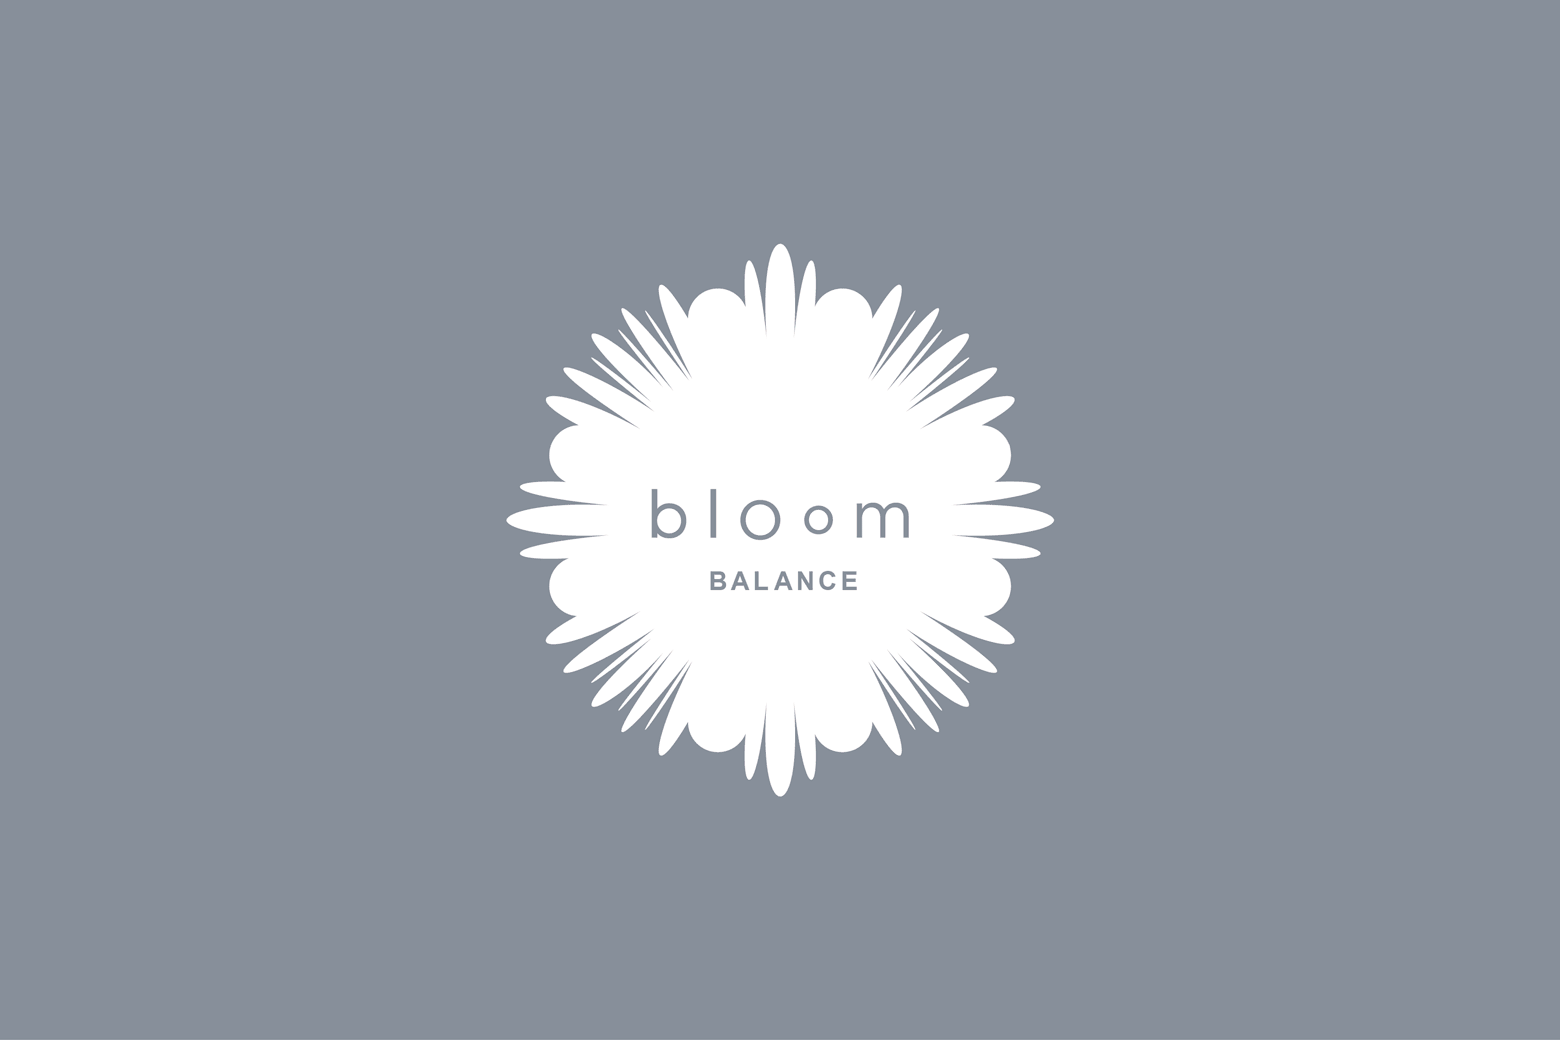 blOom BALANCE – We Are Open Studio